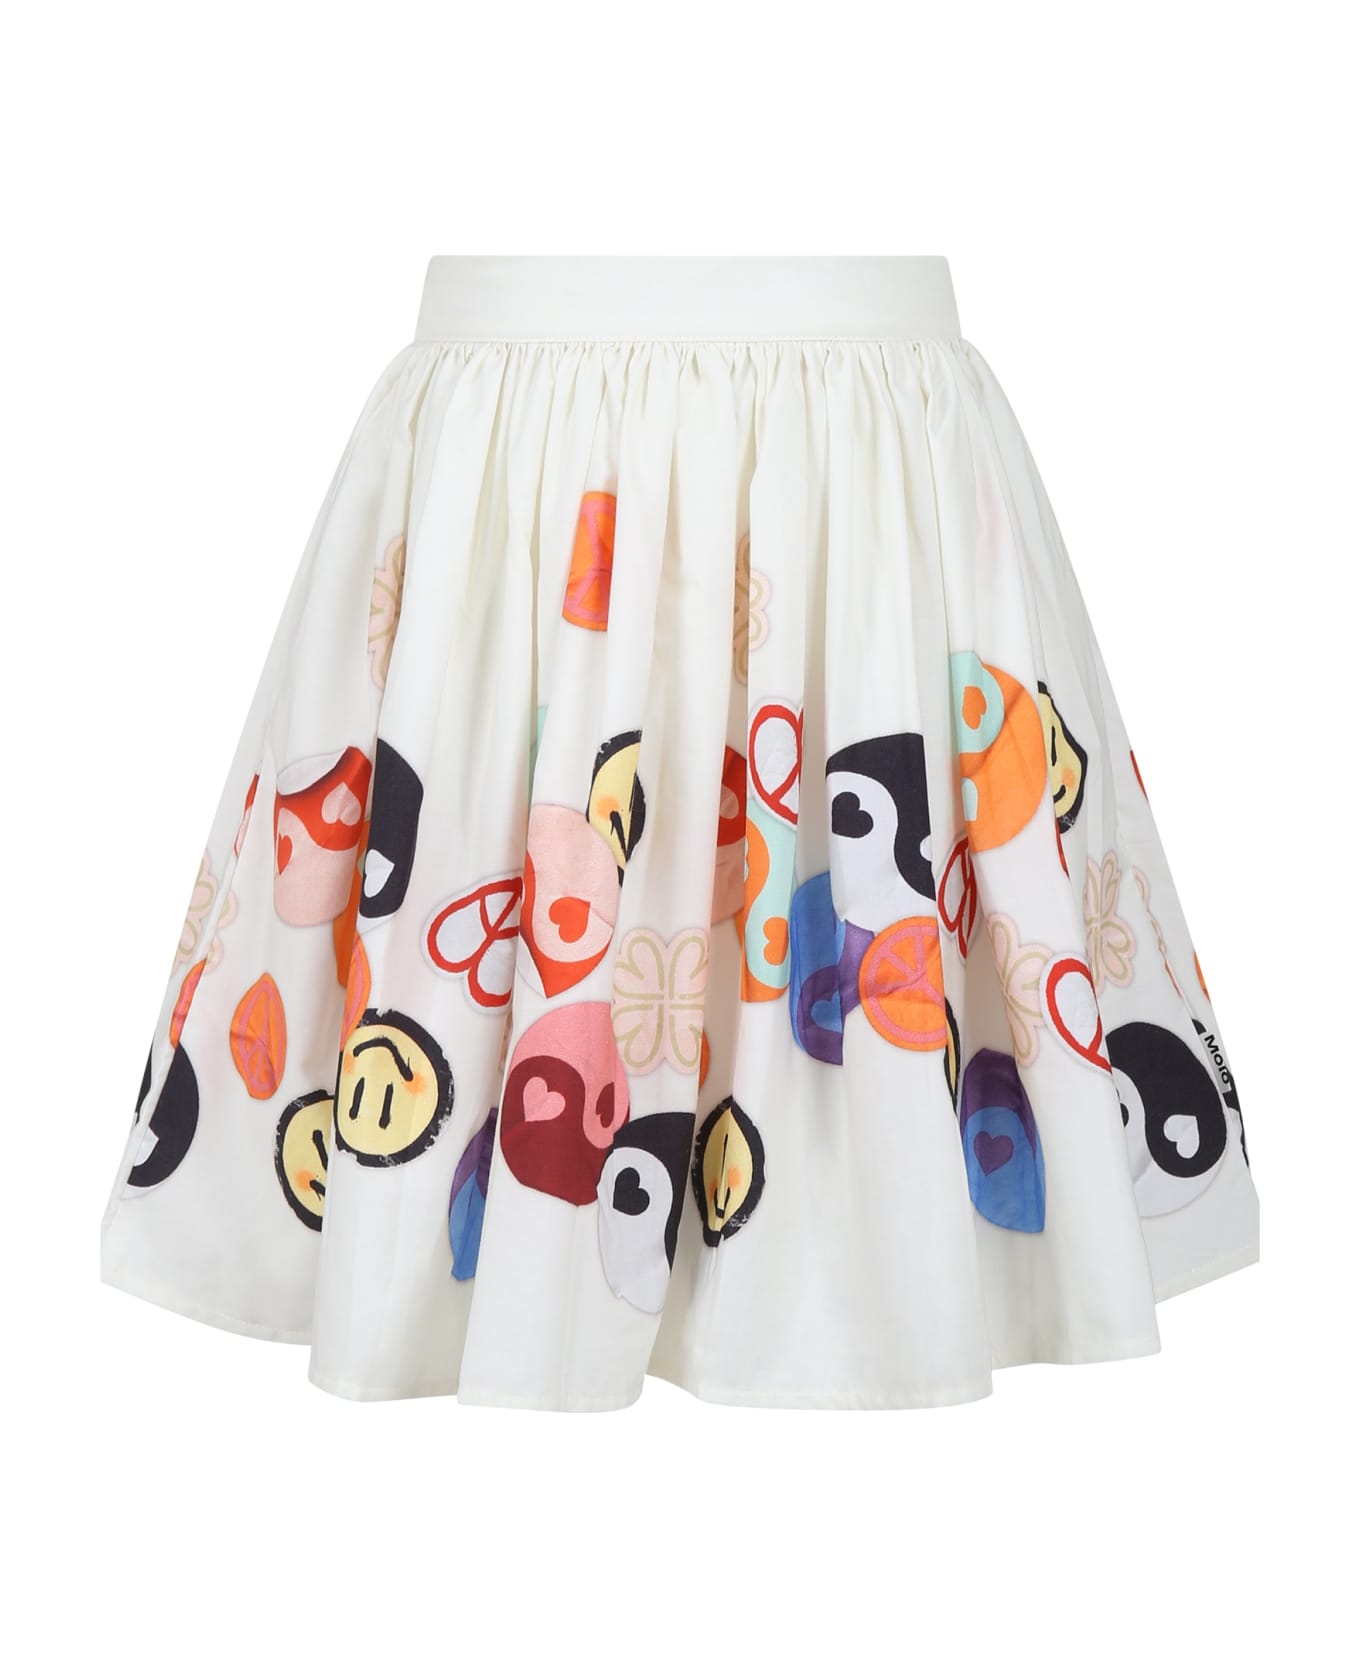 Molo White Skirt For Girl With Smiley Print - White